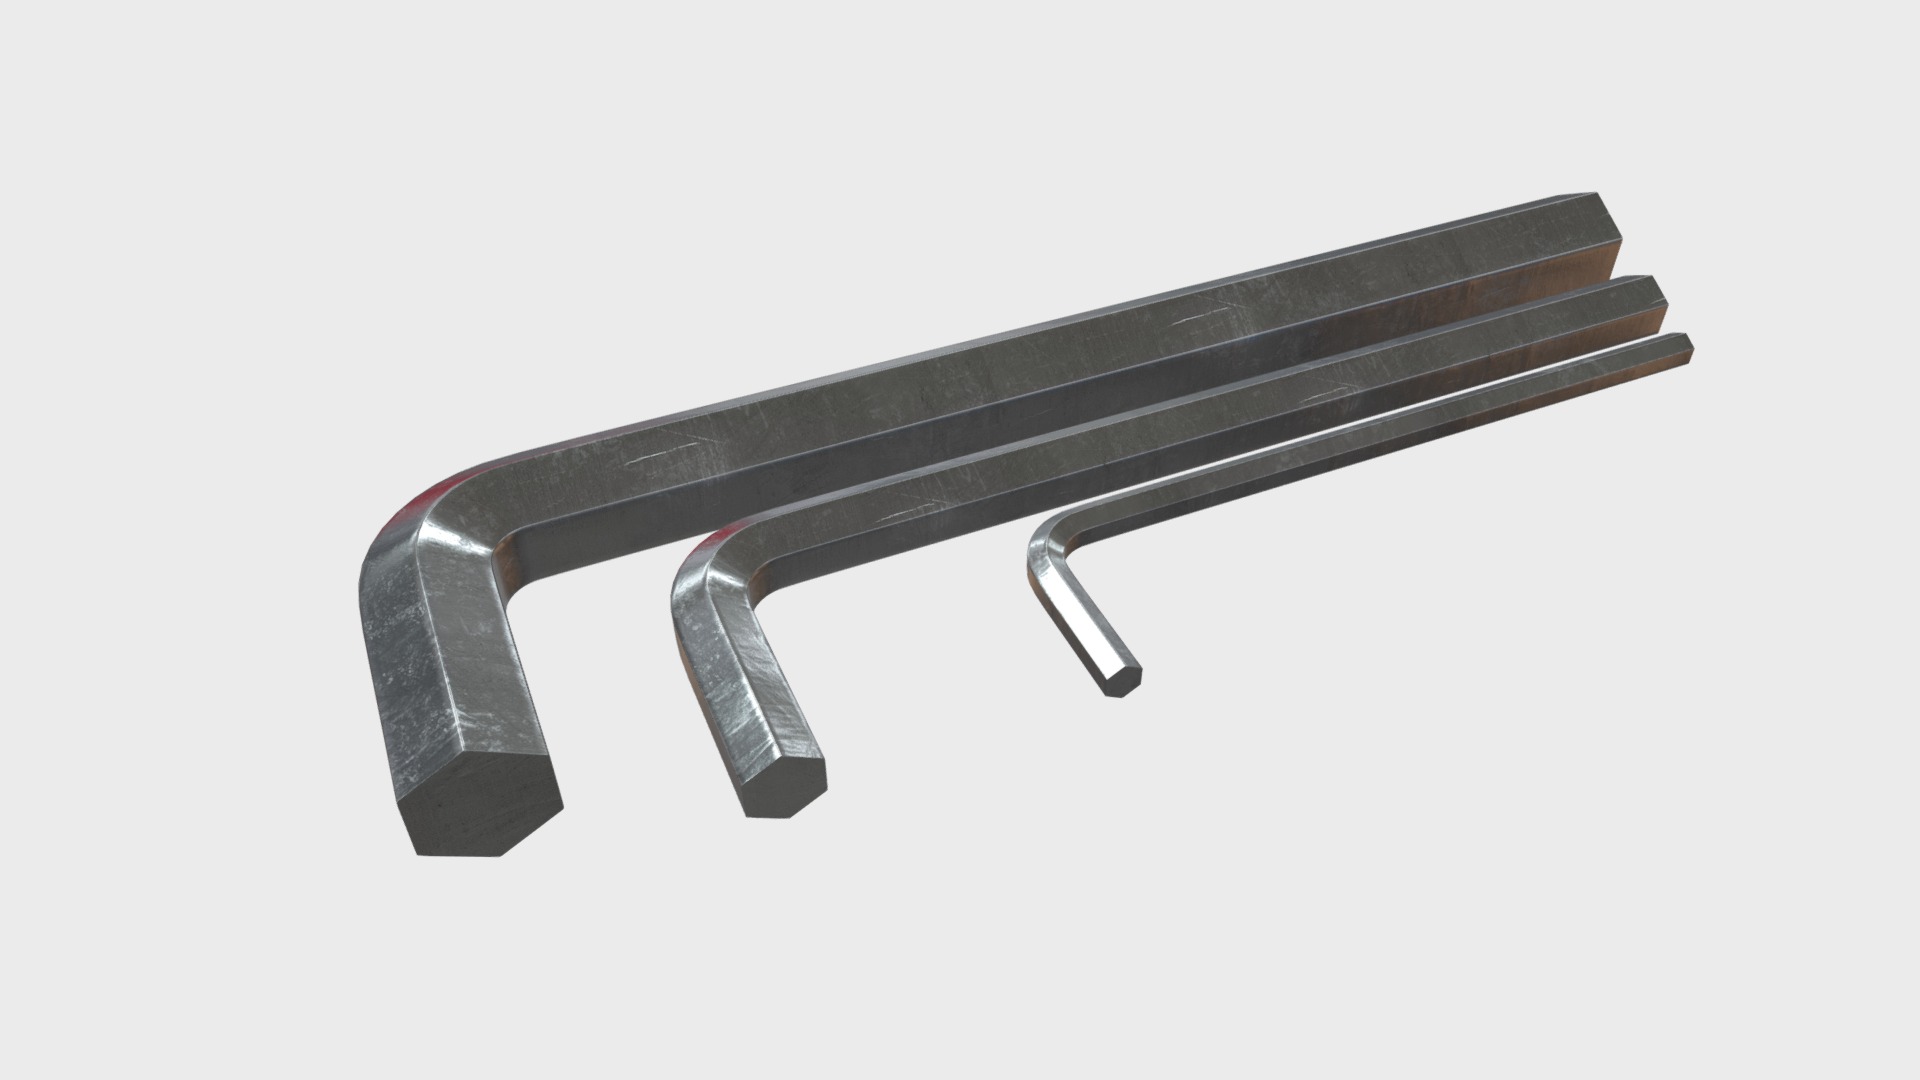 3D model Allen hex keys - This is a 3D model of the Allen hex keys. The 3D model is about a black and silver sword.